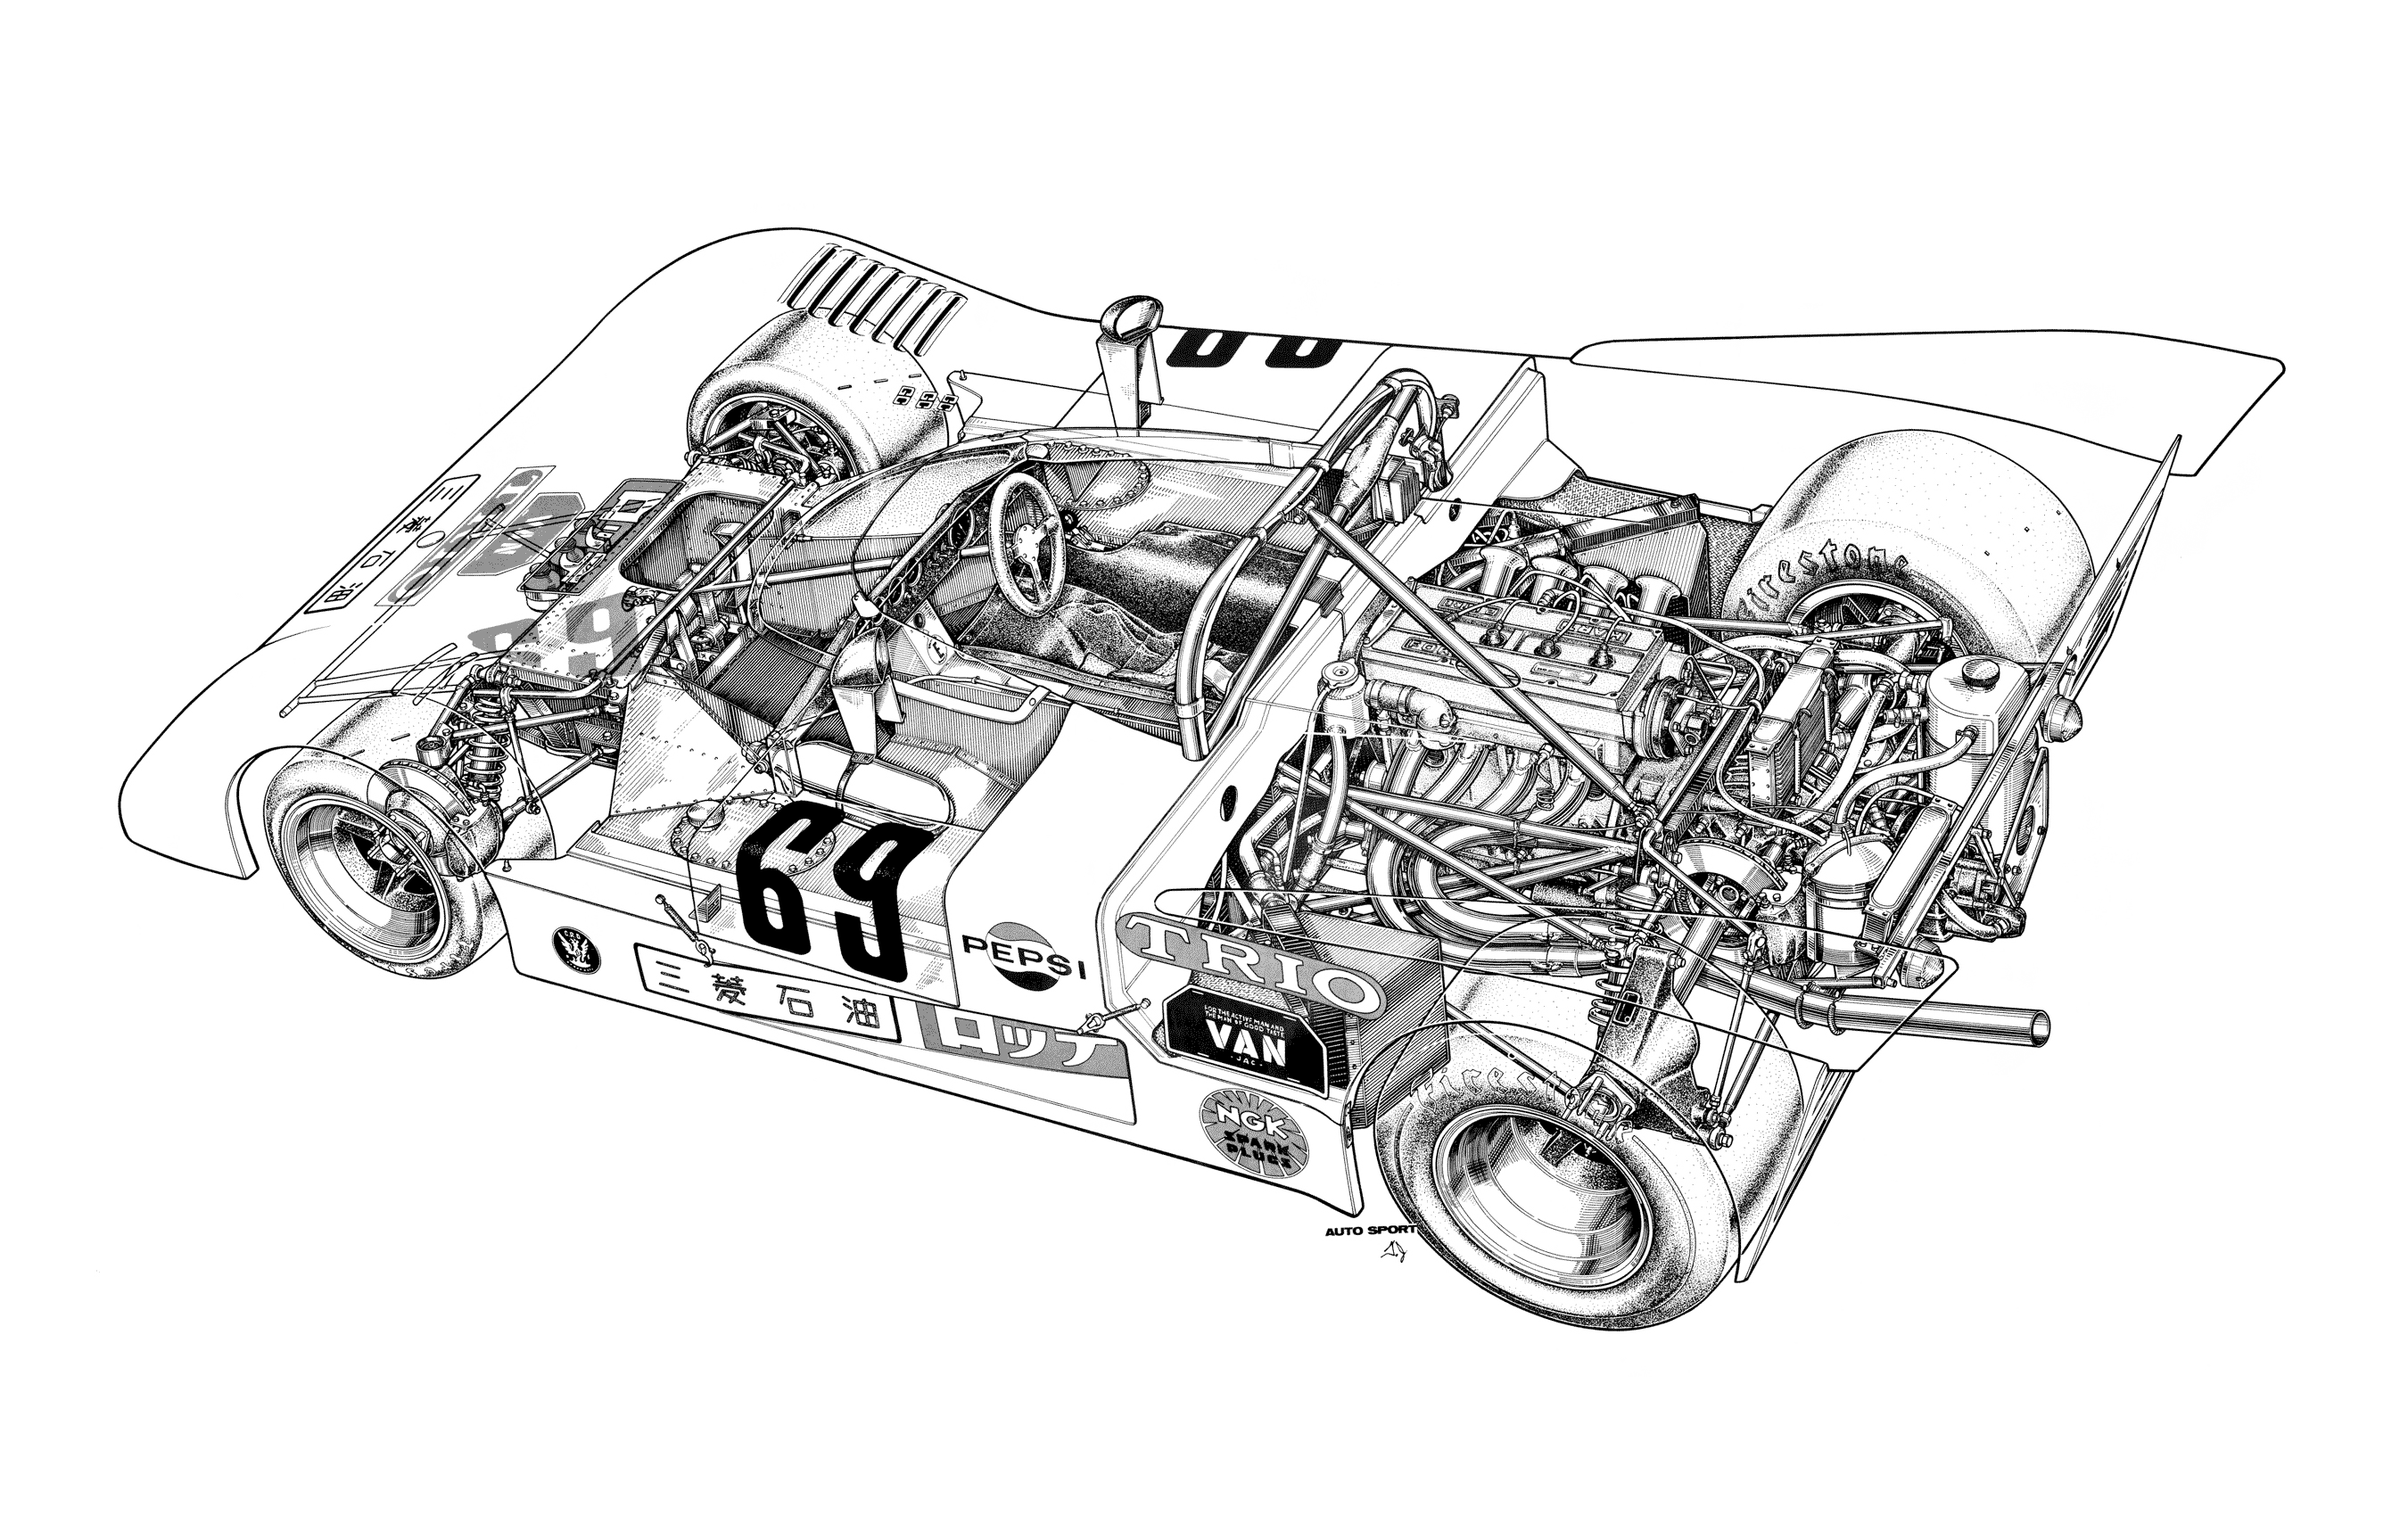 GRD S72 cutaway drawing